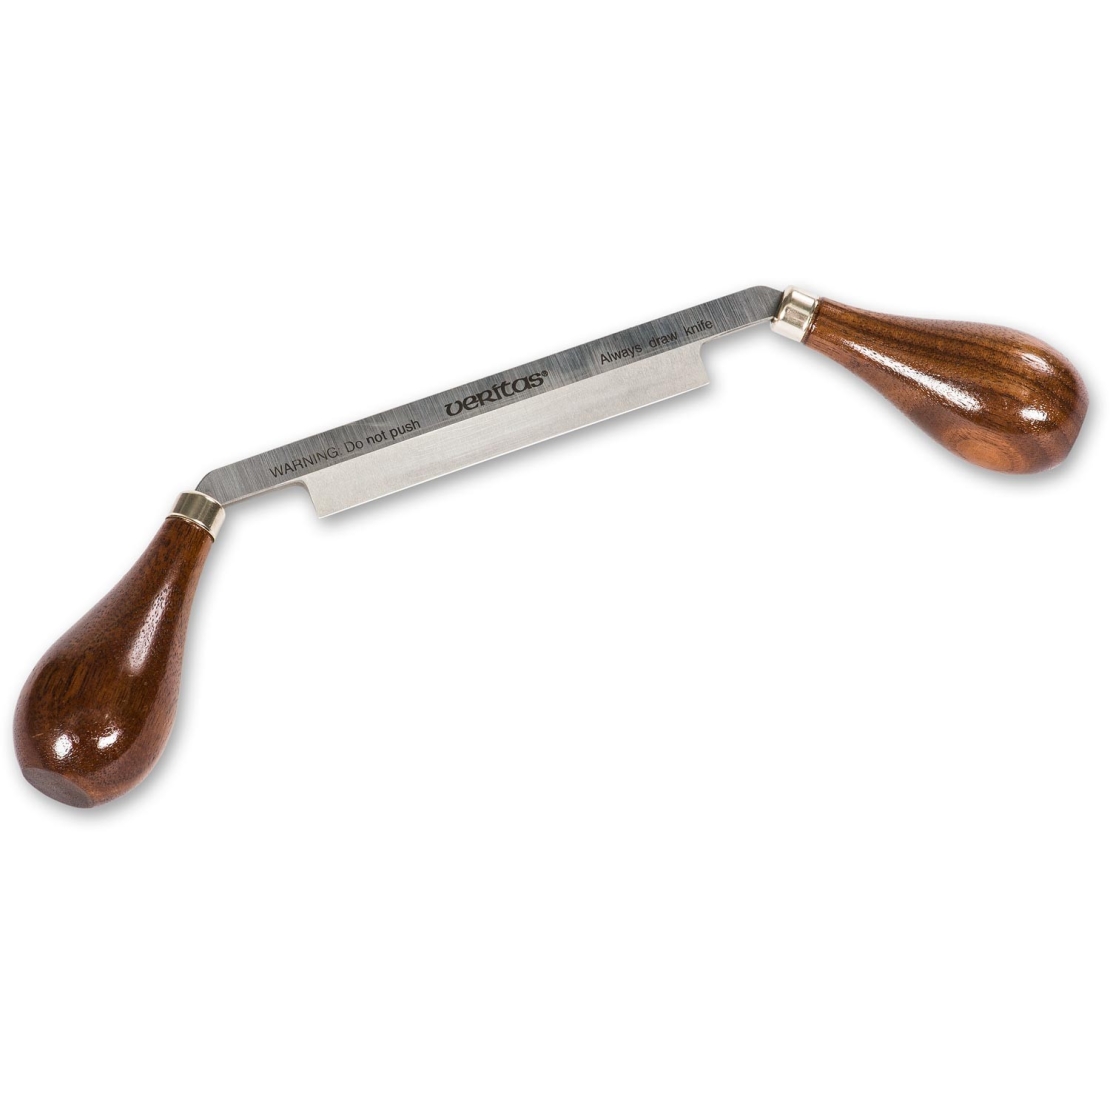 סכין משיכה קטן לגילוף ווריטאס - VARITAS CARVER'S DRAW KNIFE